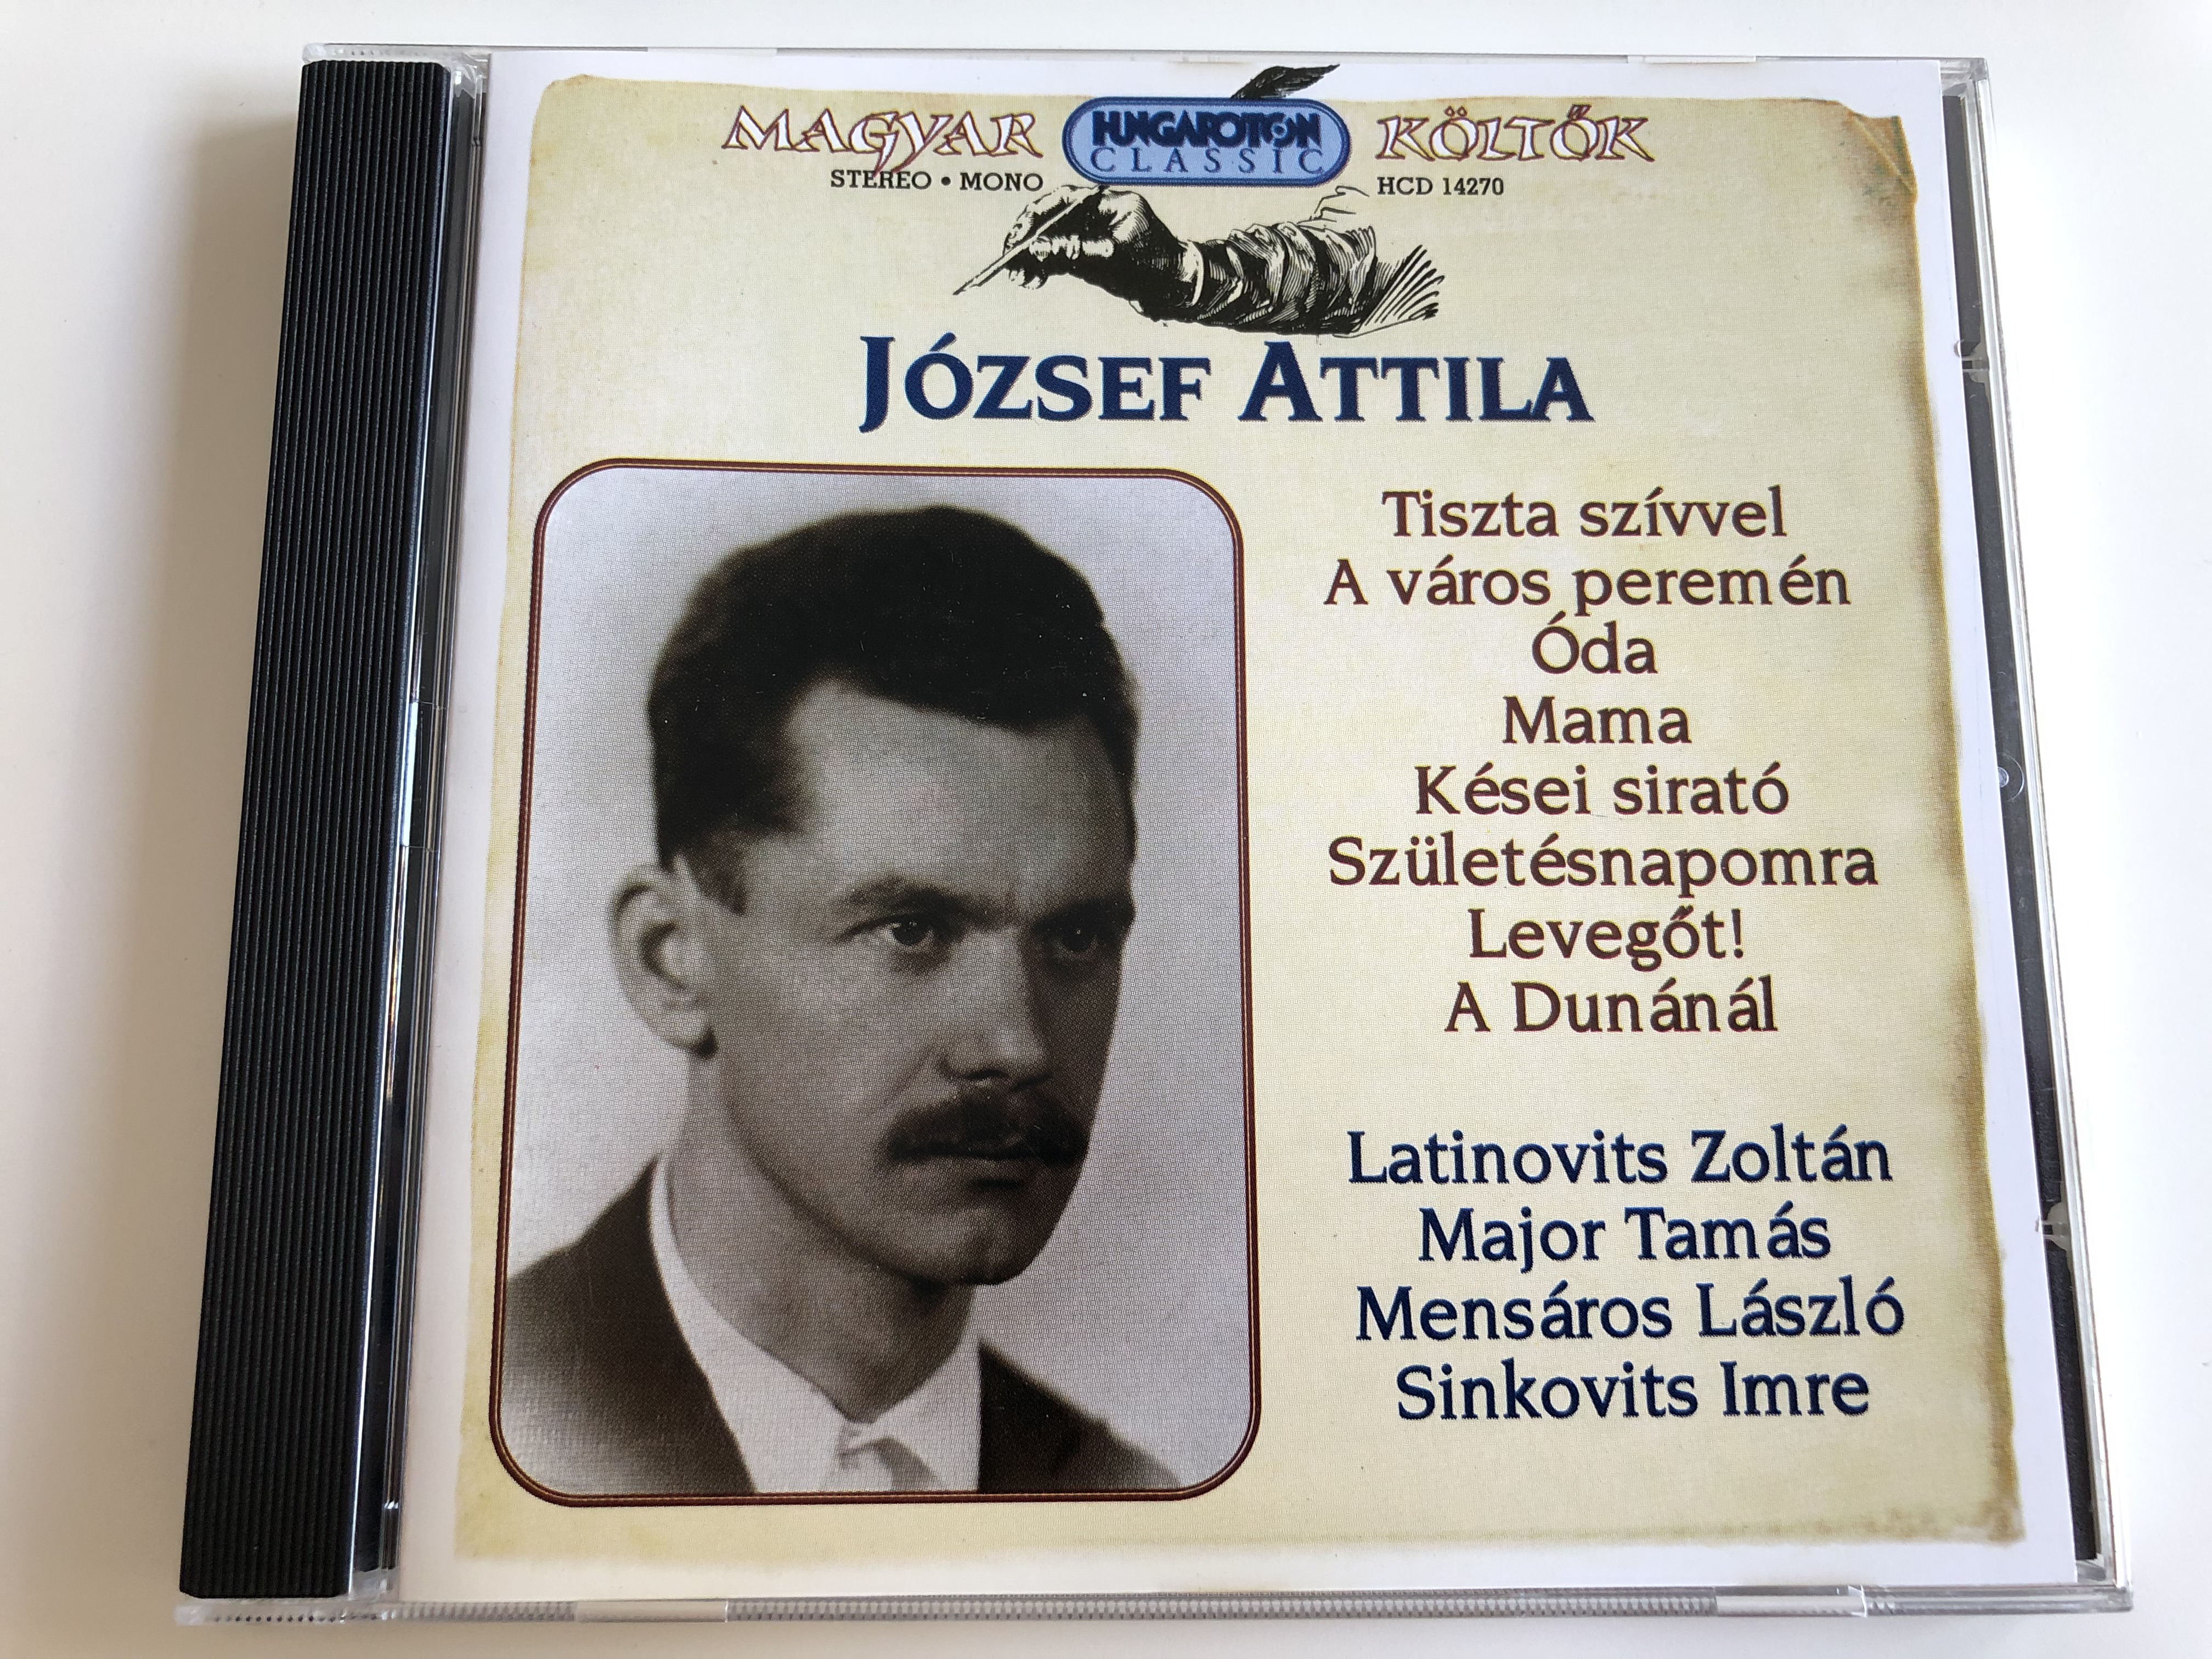 j-zsef-attila-magyar-k-lt-k-hungarian-poets-series-performed-by-latinovits-zolt-n-mens-ros-l-szl-major-tam-s-sinkovits-imre-hungaroton-classic-audio-cd-1999-hcd-14270-1-.jpg